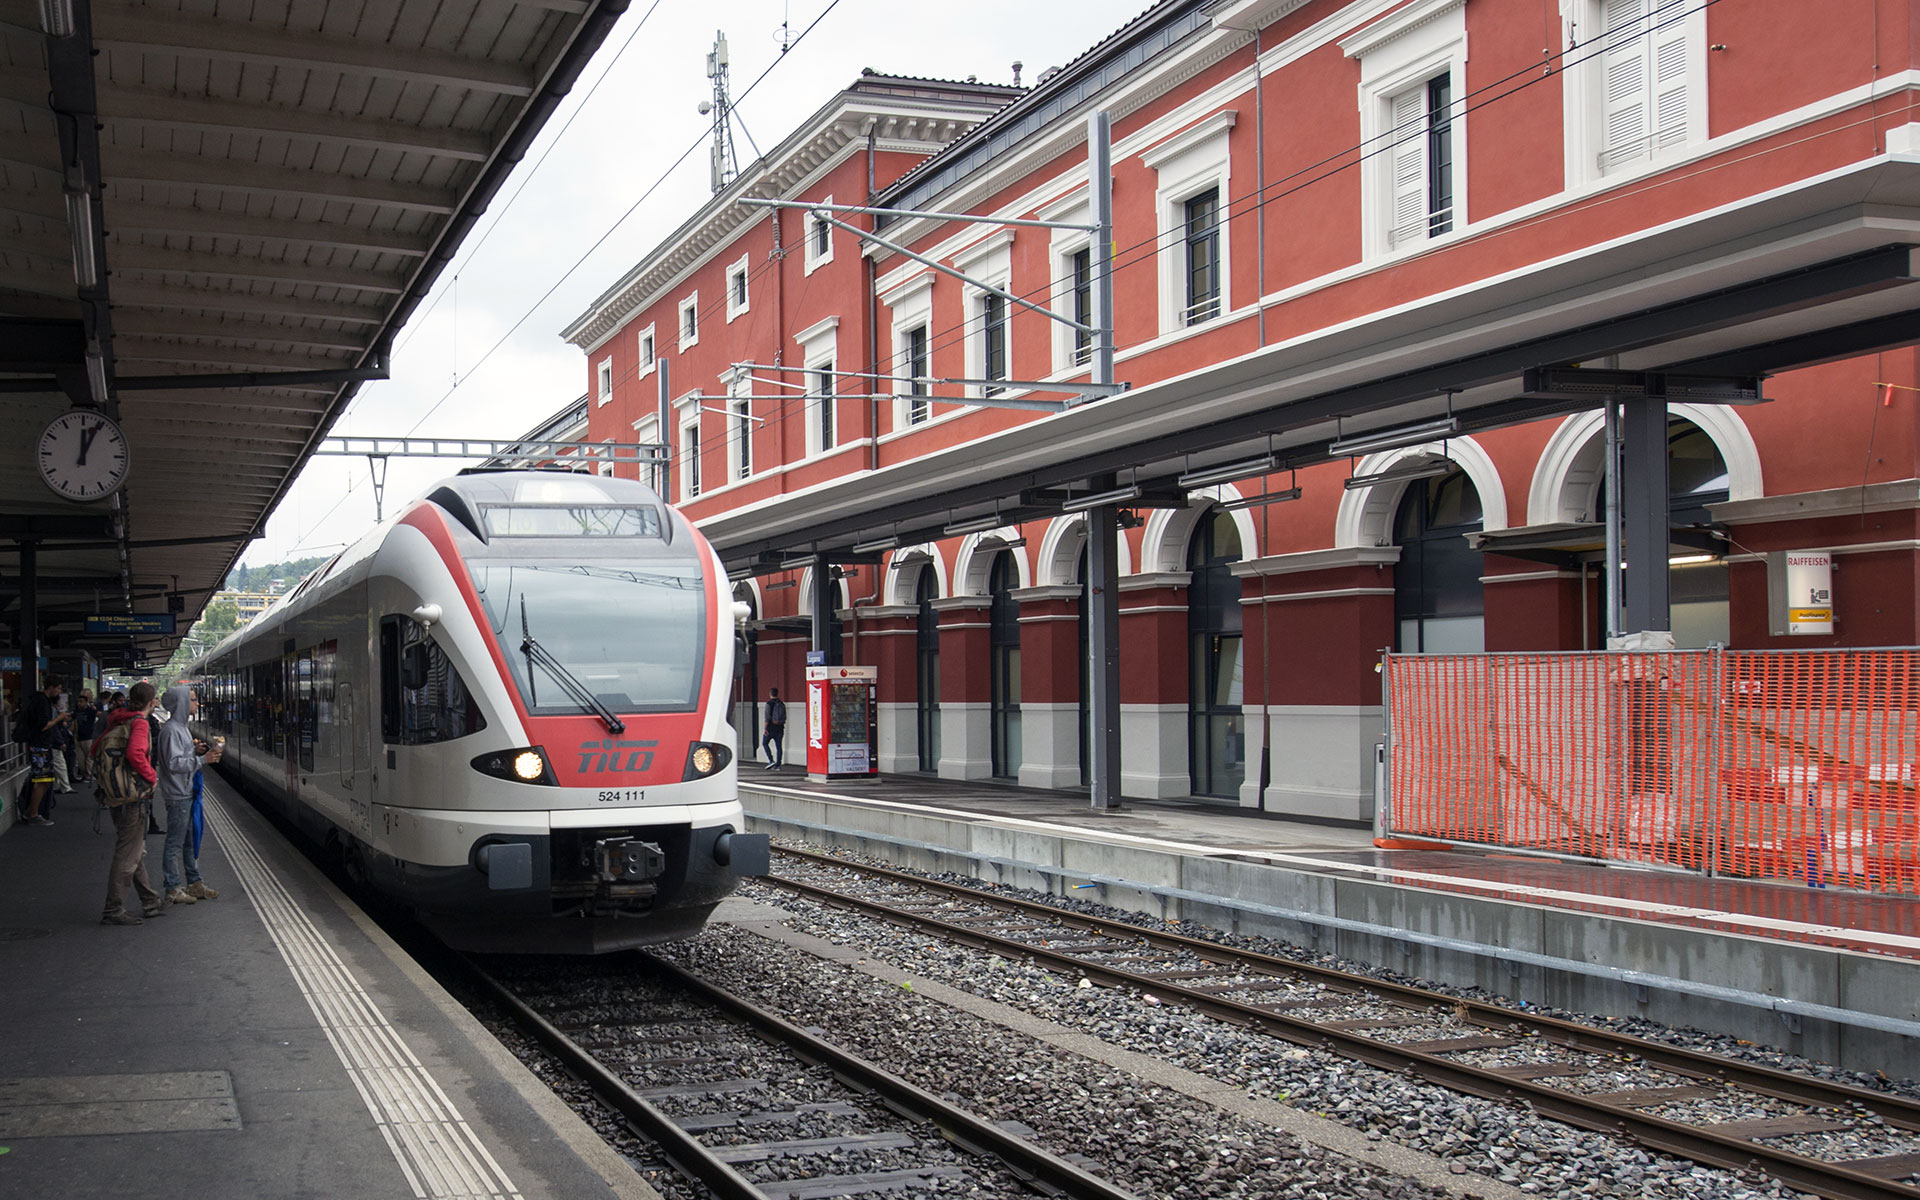 A TILO (Ticino-Lombardy) regional train at Lugano station (photo © Ciolca / dreamstime.com).